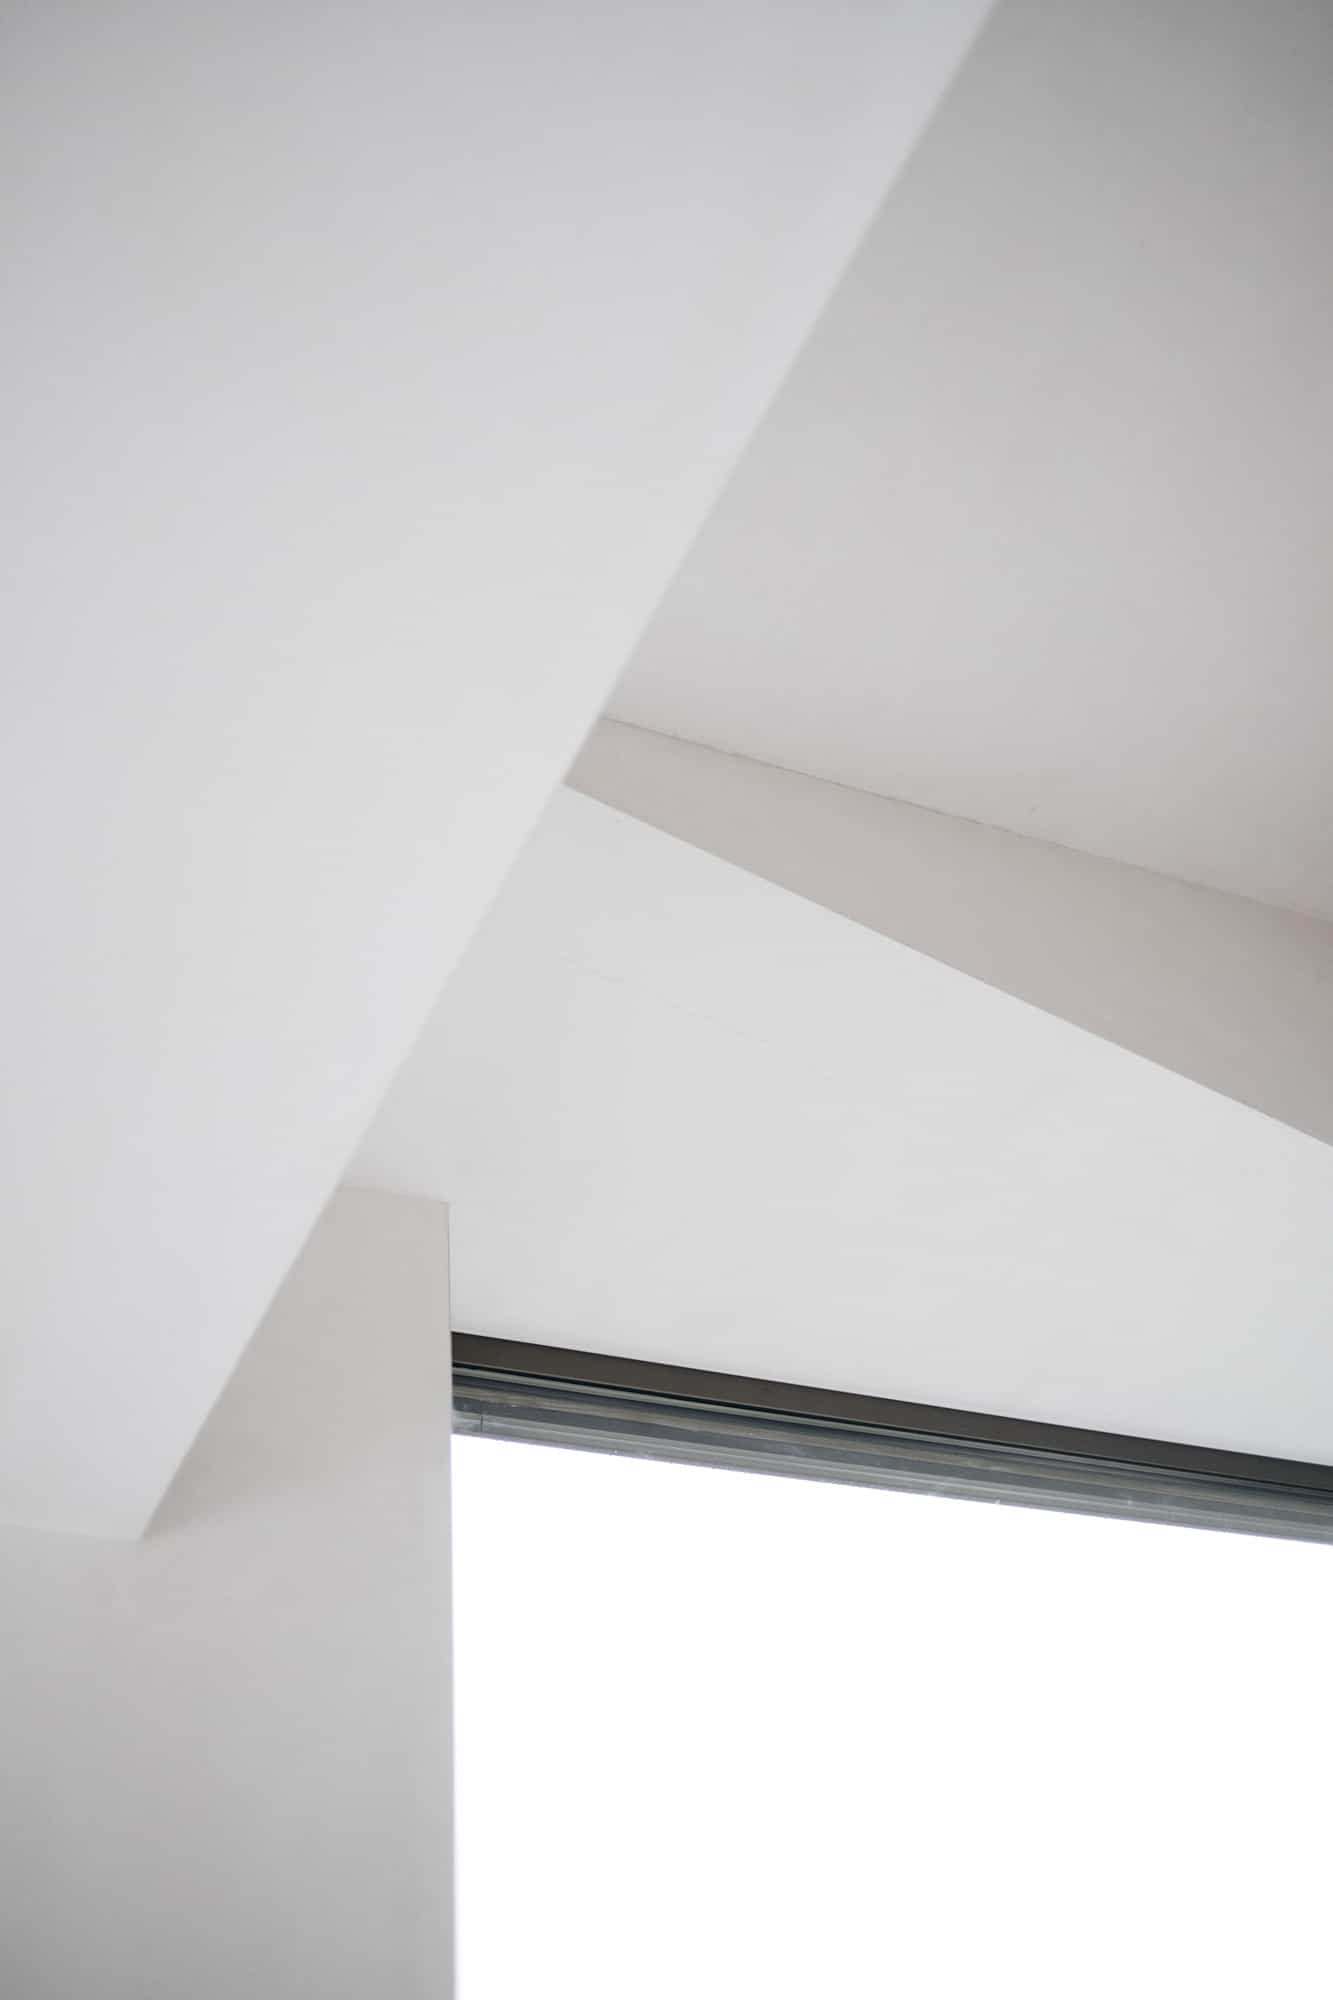 Standaert-BURO-Carchitecten-plafond